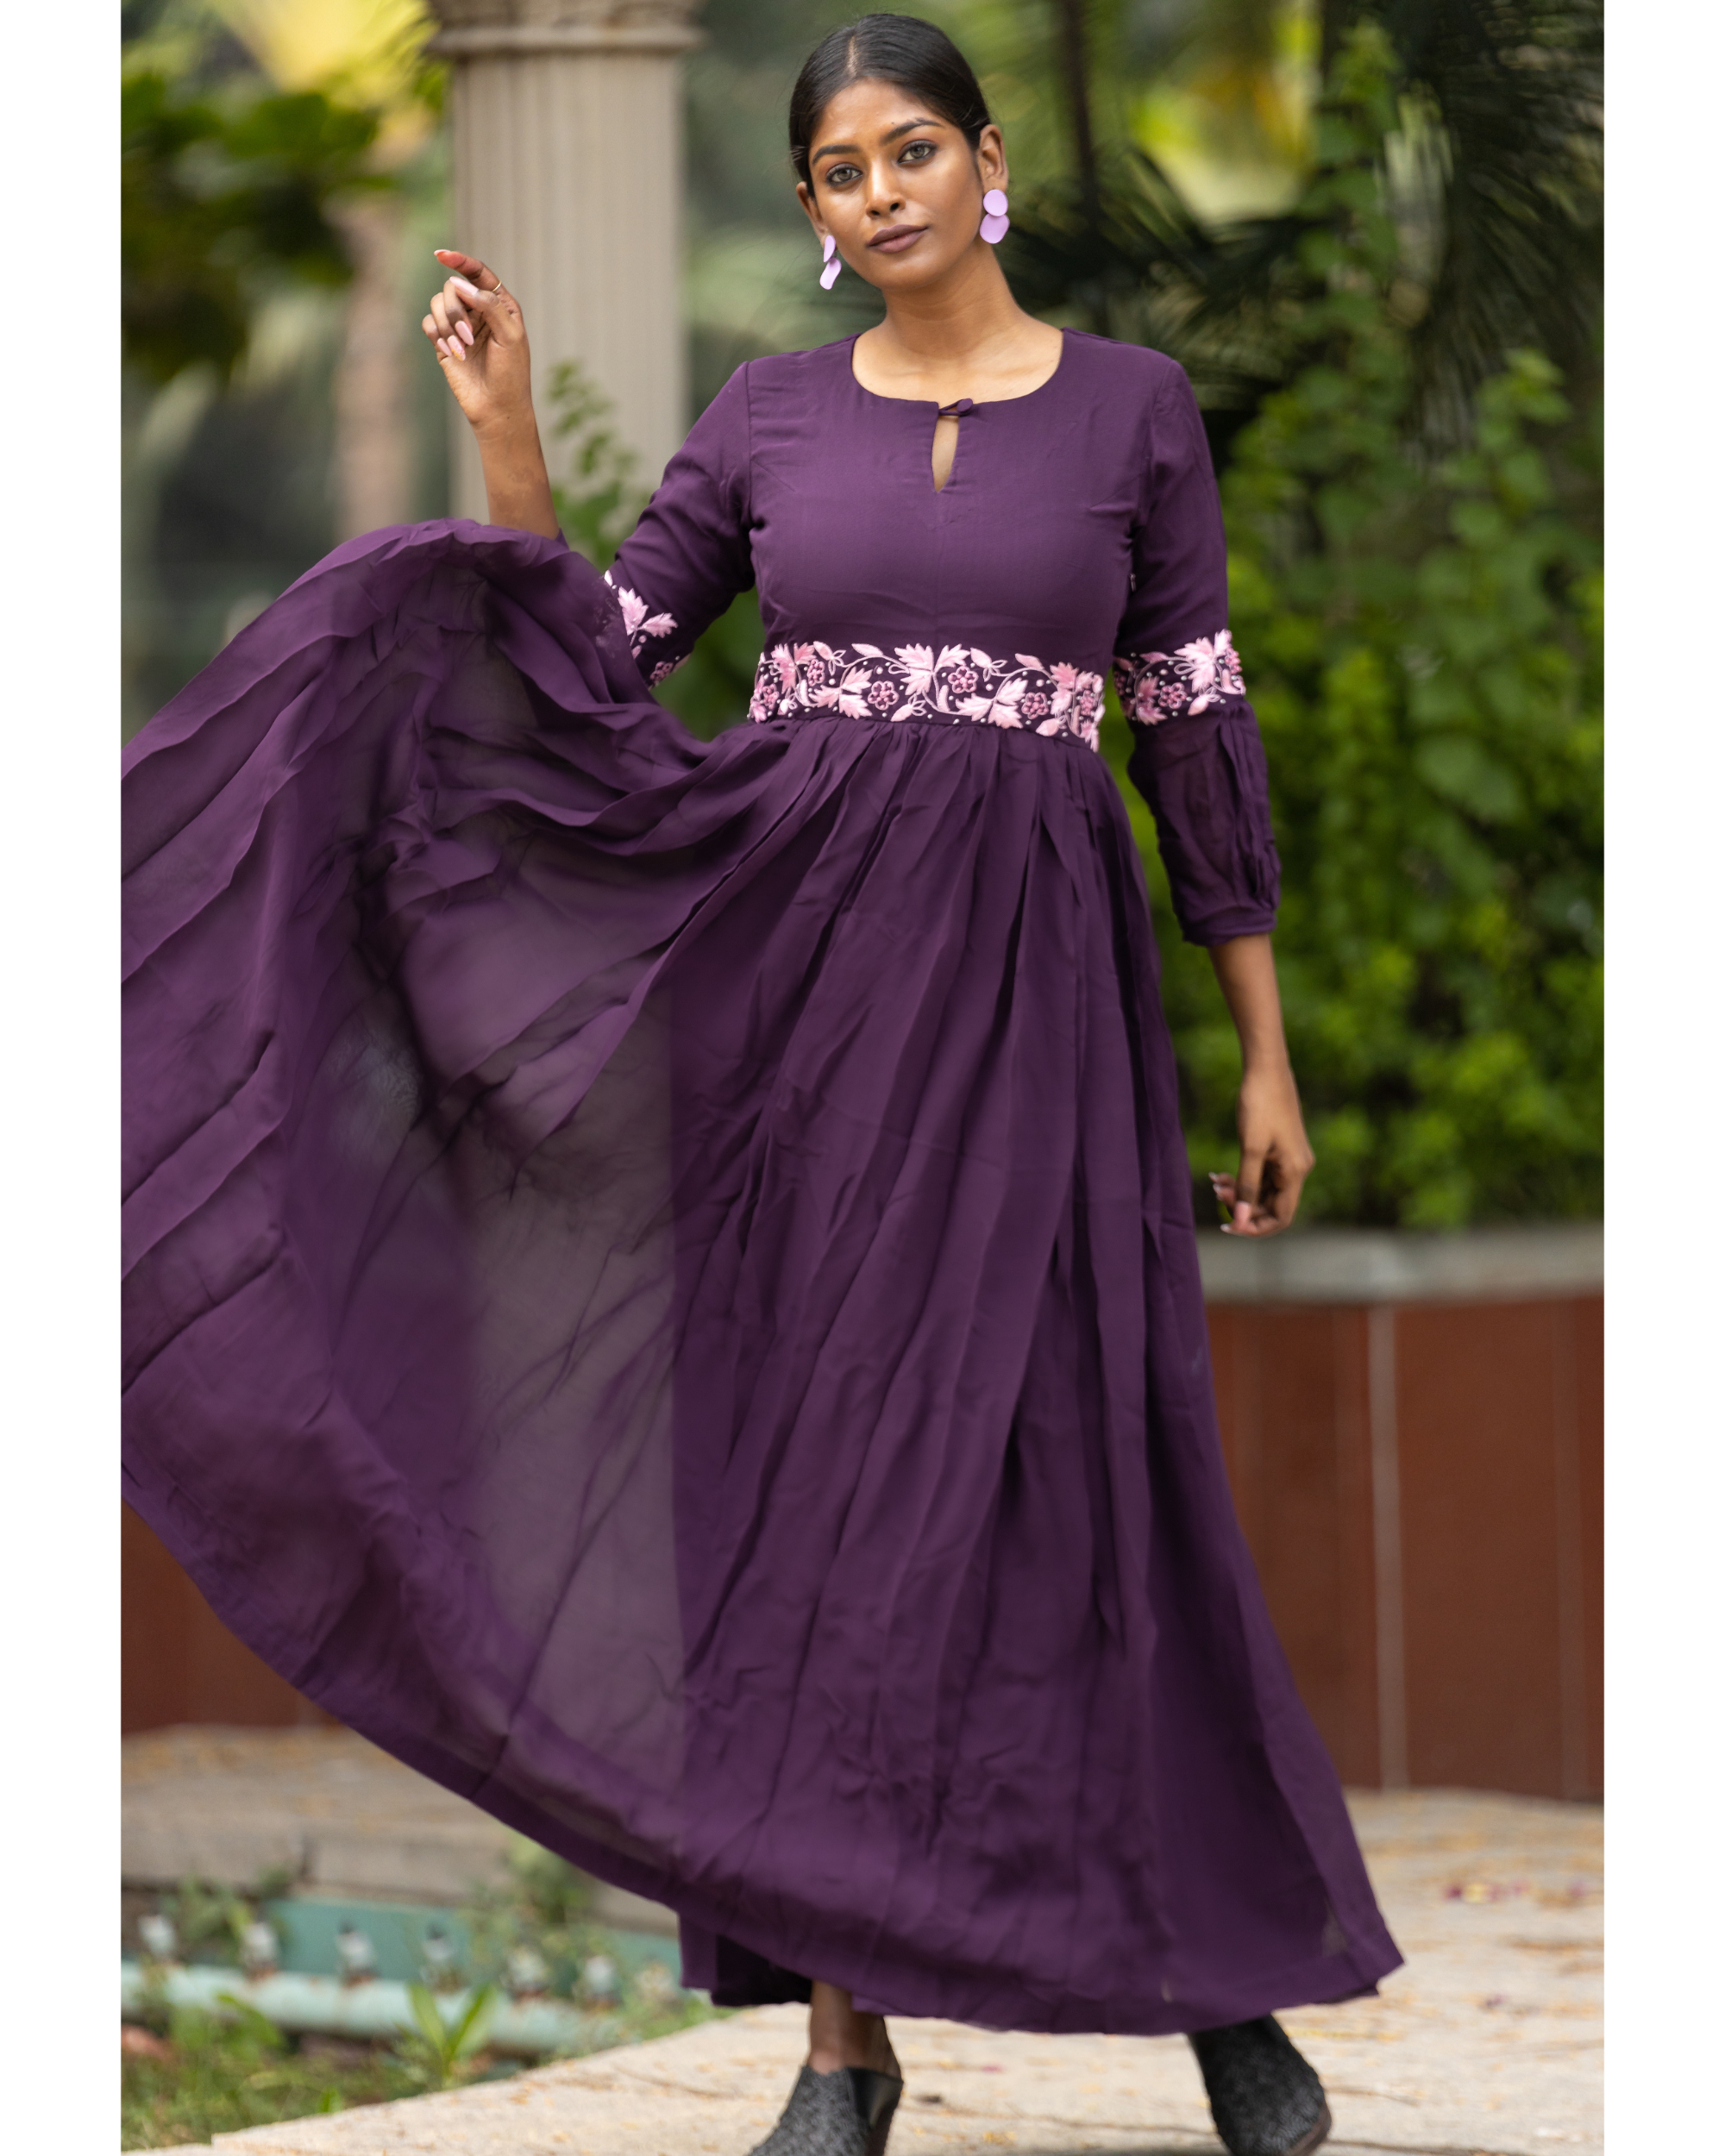 Reveal 155+ purple gown dress latest